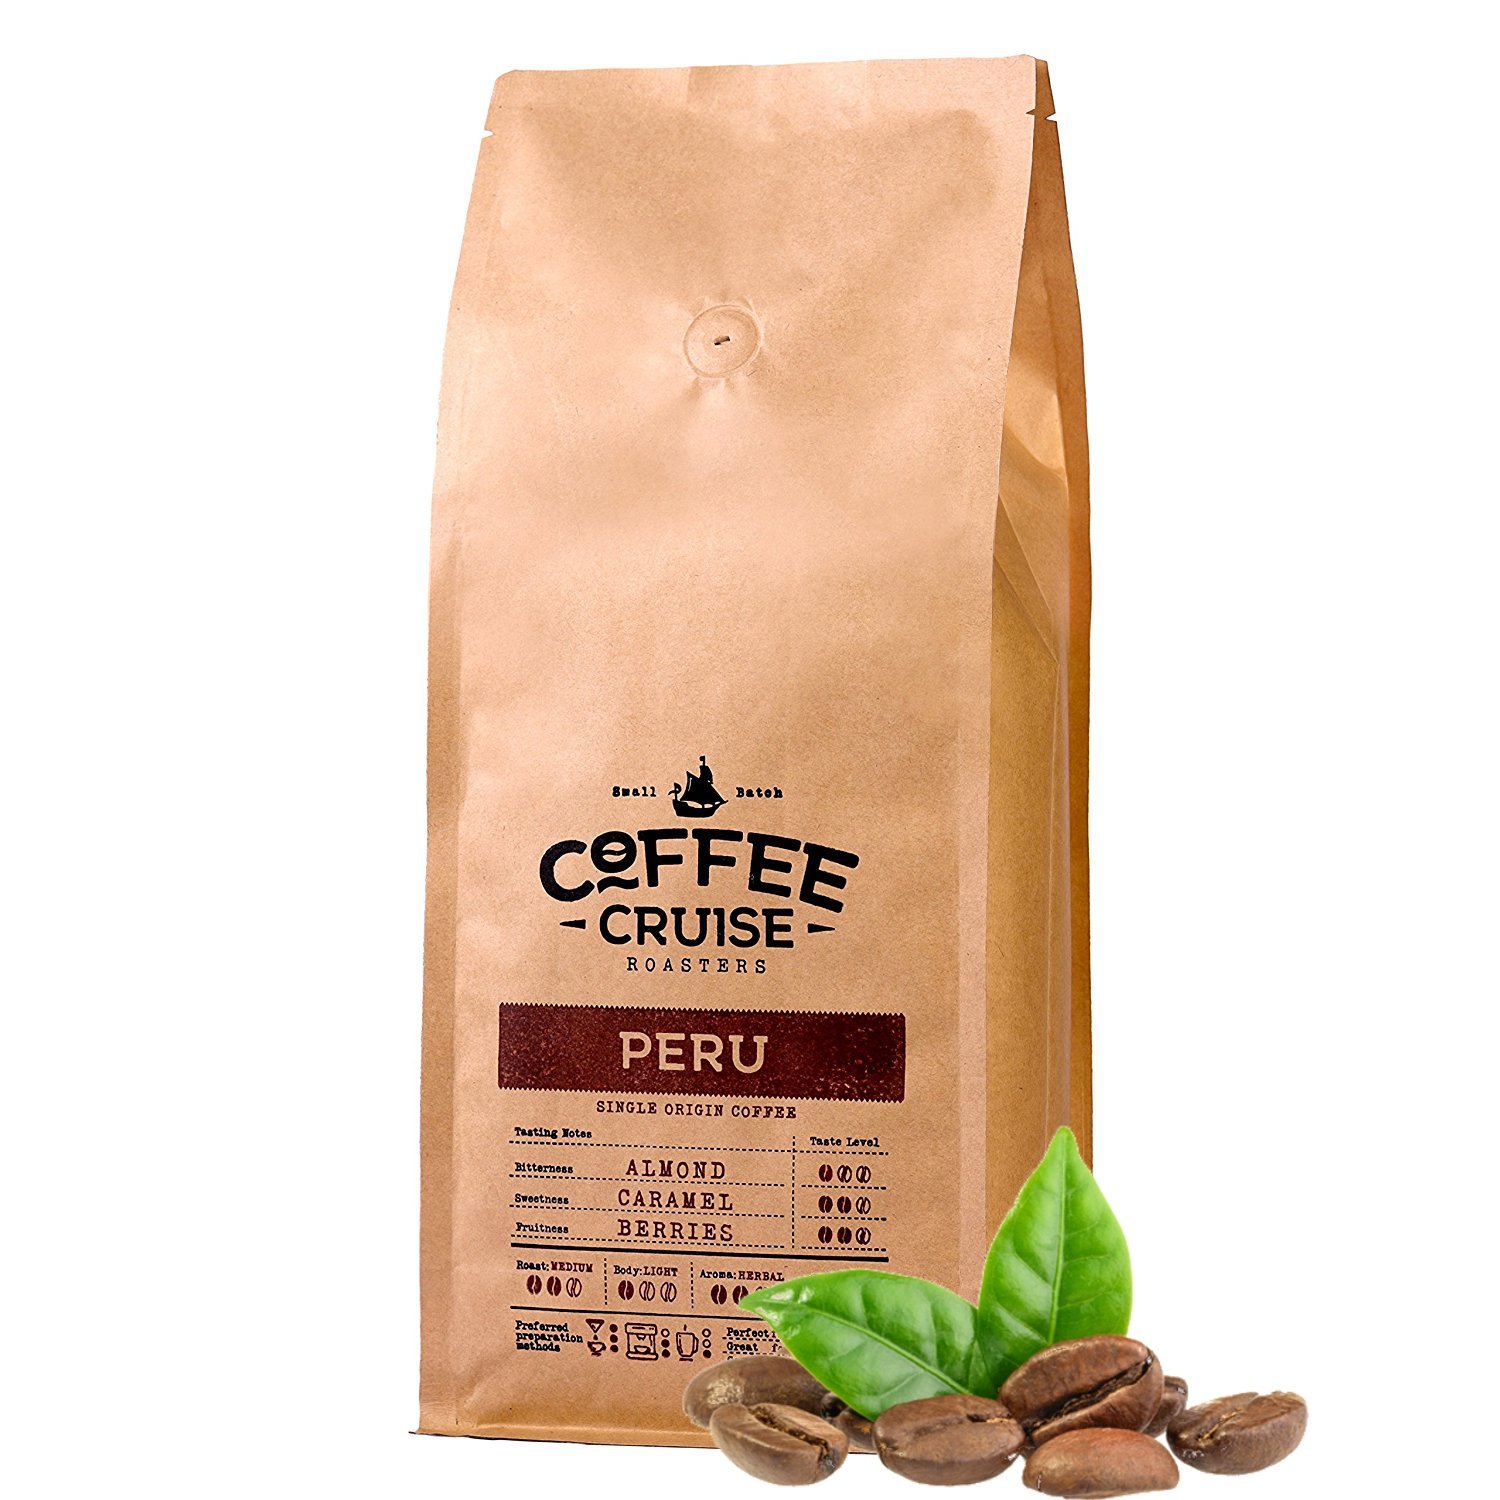 Coffee Cruise Peru coffee beans 1kg - slight roasting - aroma caramel and herbs - for all coffee machines - 100% Arabic